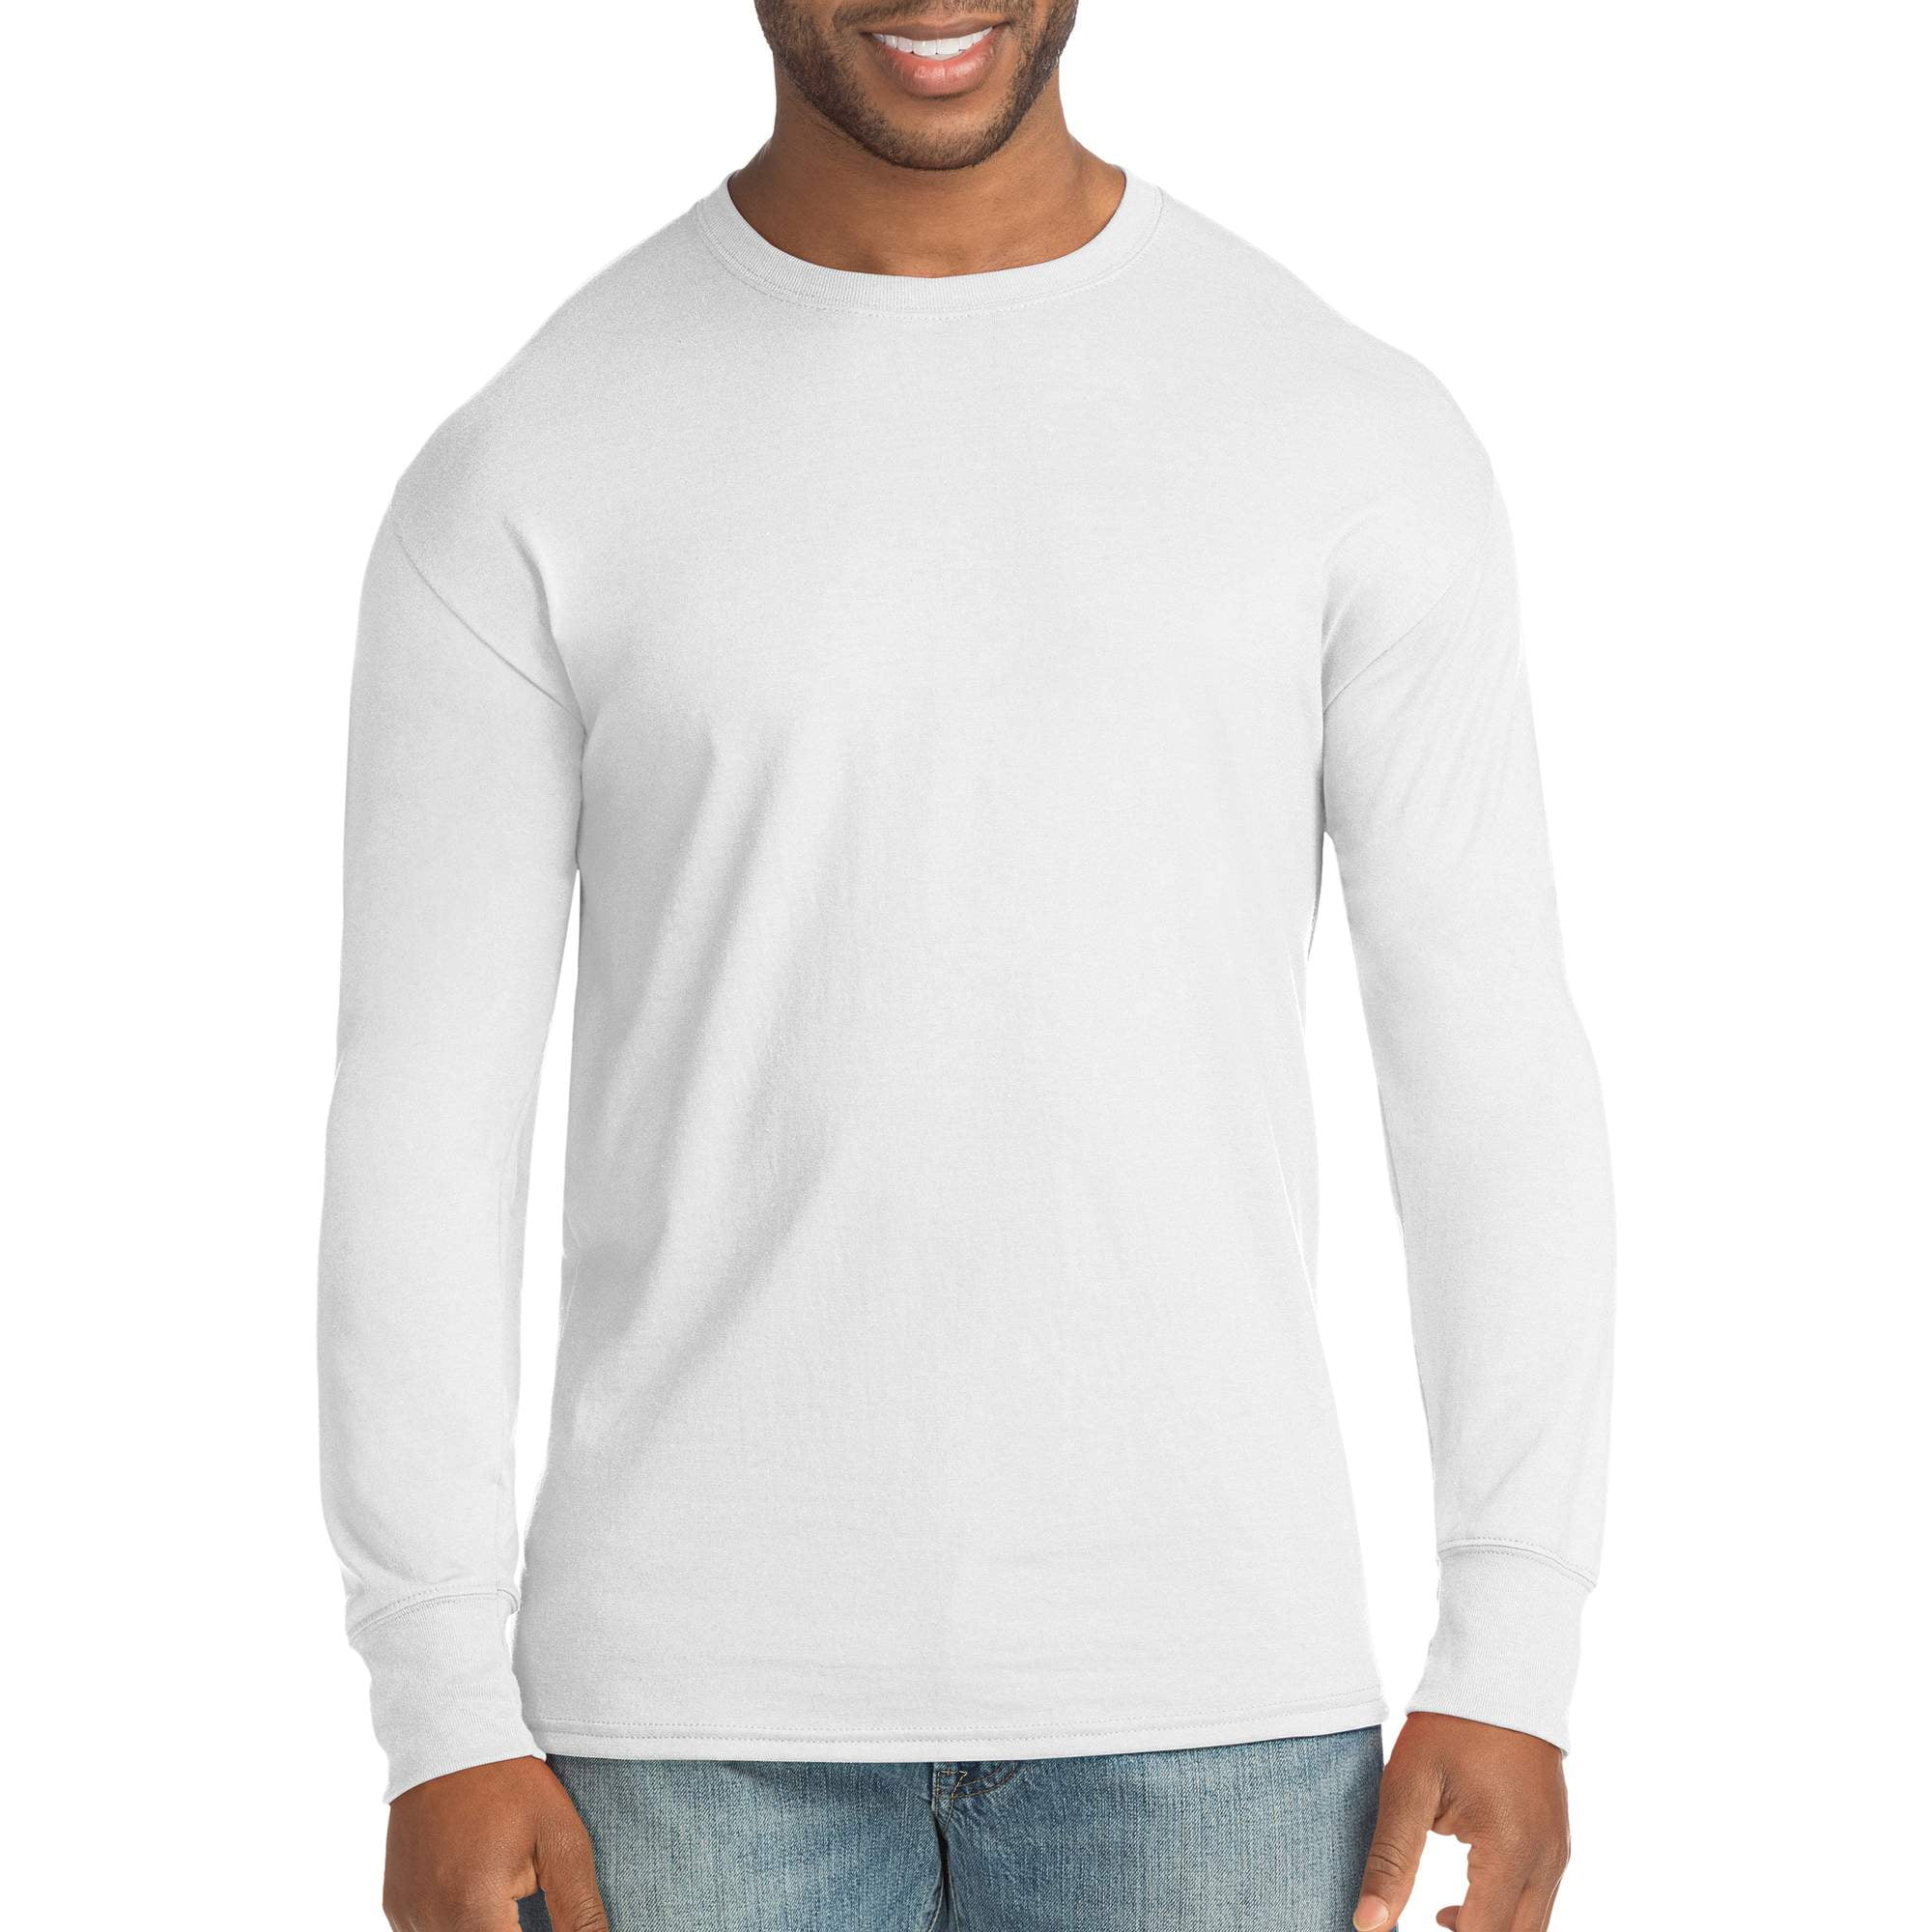 Hanes - Hanes Tall men's freshiq x-temp long-sleeve tee - Walmart.com ... Tall Long Sleeve T Shirts Mens